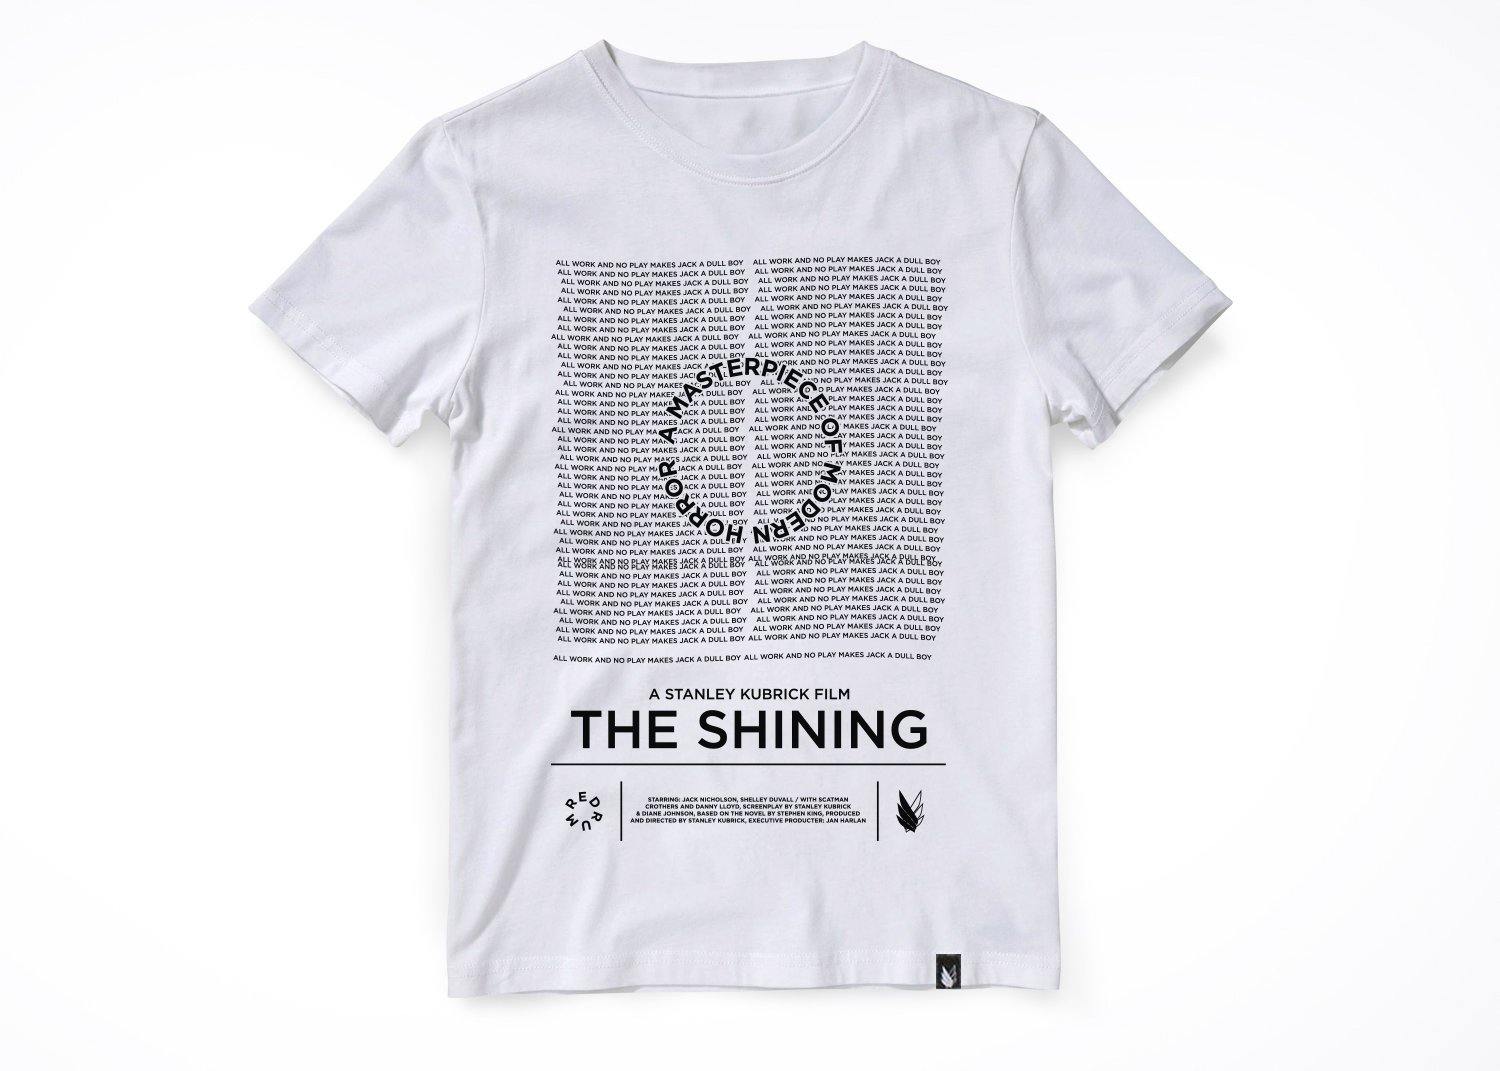 the shining - Stockholm Co. - Playera - cultura pop, halloween, hombre, otros, playera, unisex